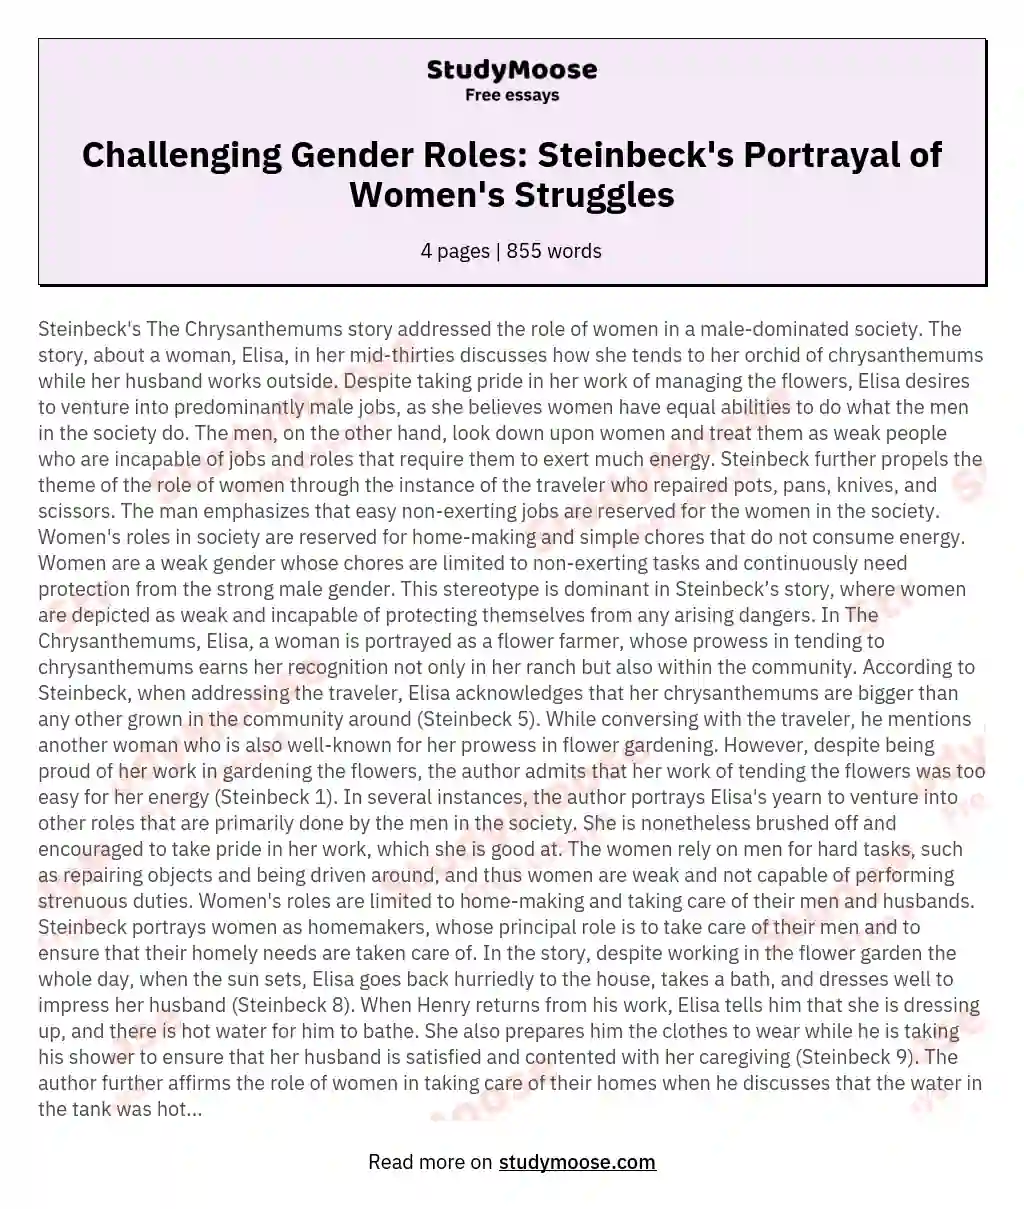 Challenging Gender Roles: Steinbeck's Portrayal of Women's Struggles essay